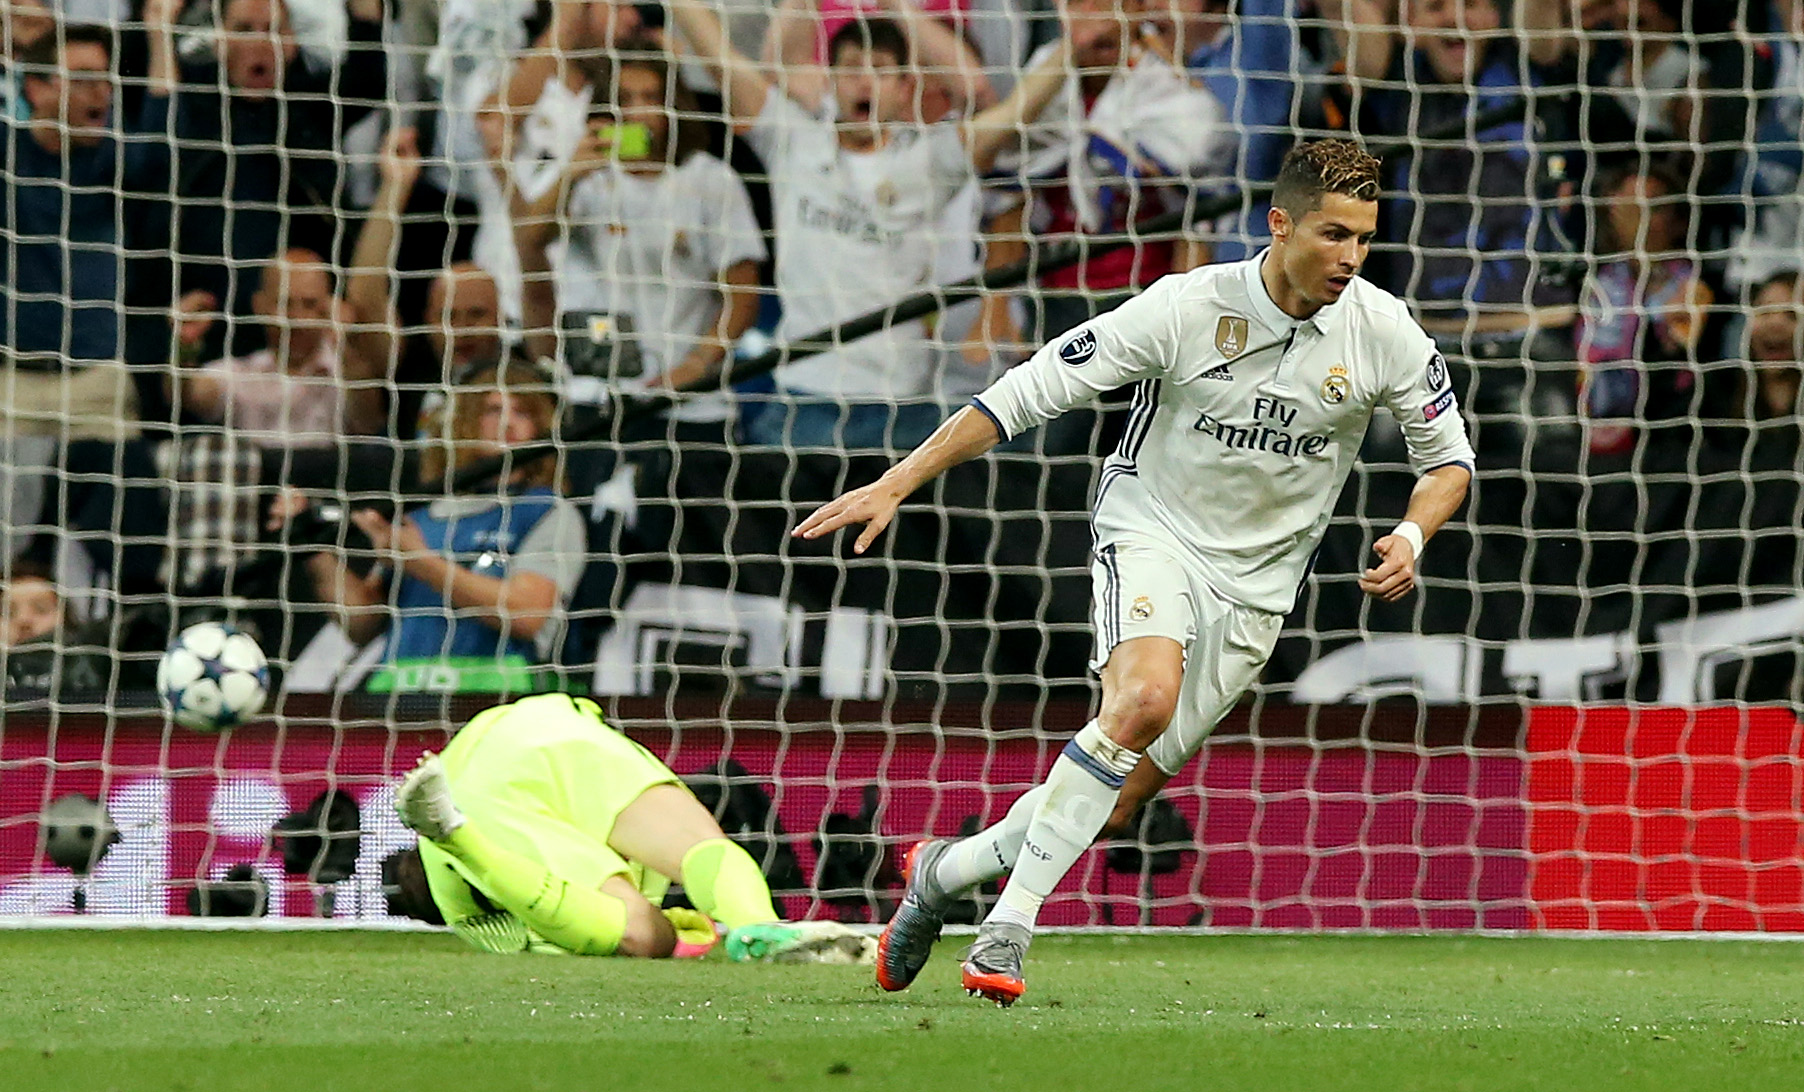 Cristiano Ronaldo Hatrick Goal - Real Madrid vs Atletico Madrid 3-0 UCL  02/05/2017 HD animated gif